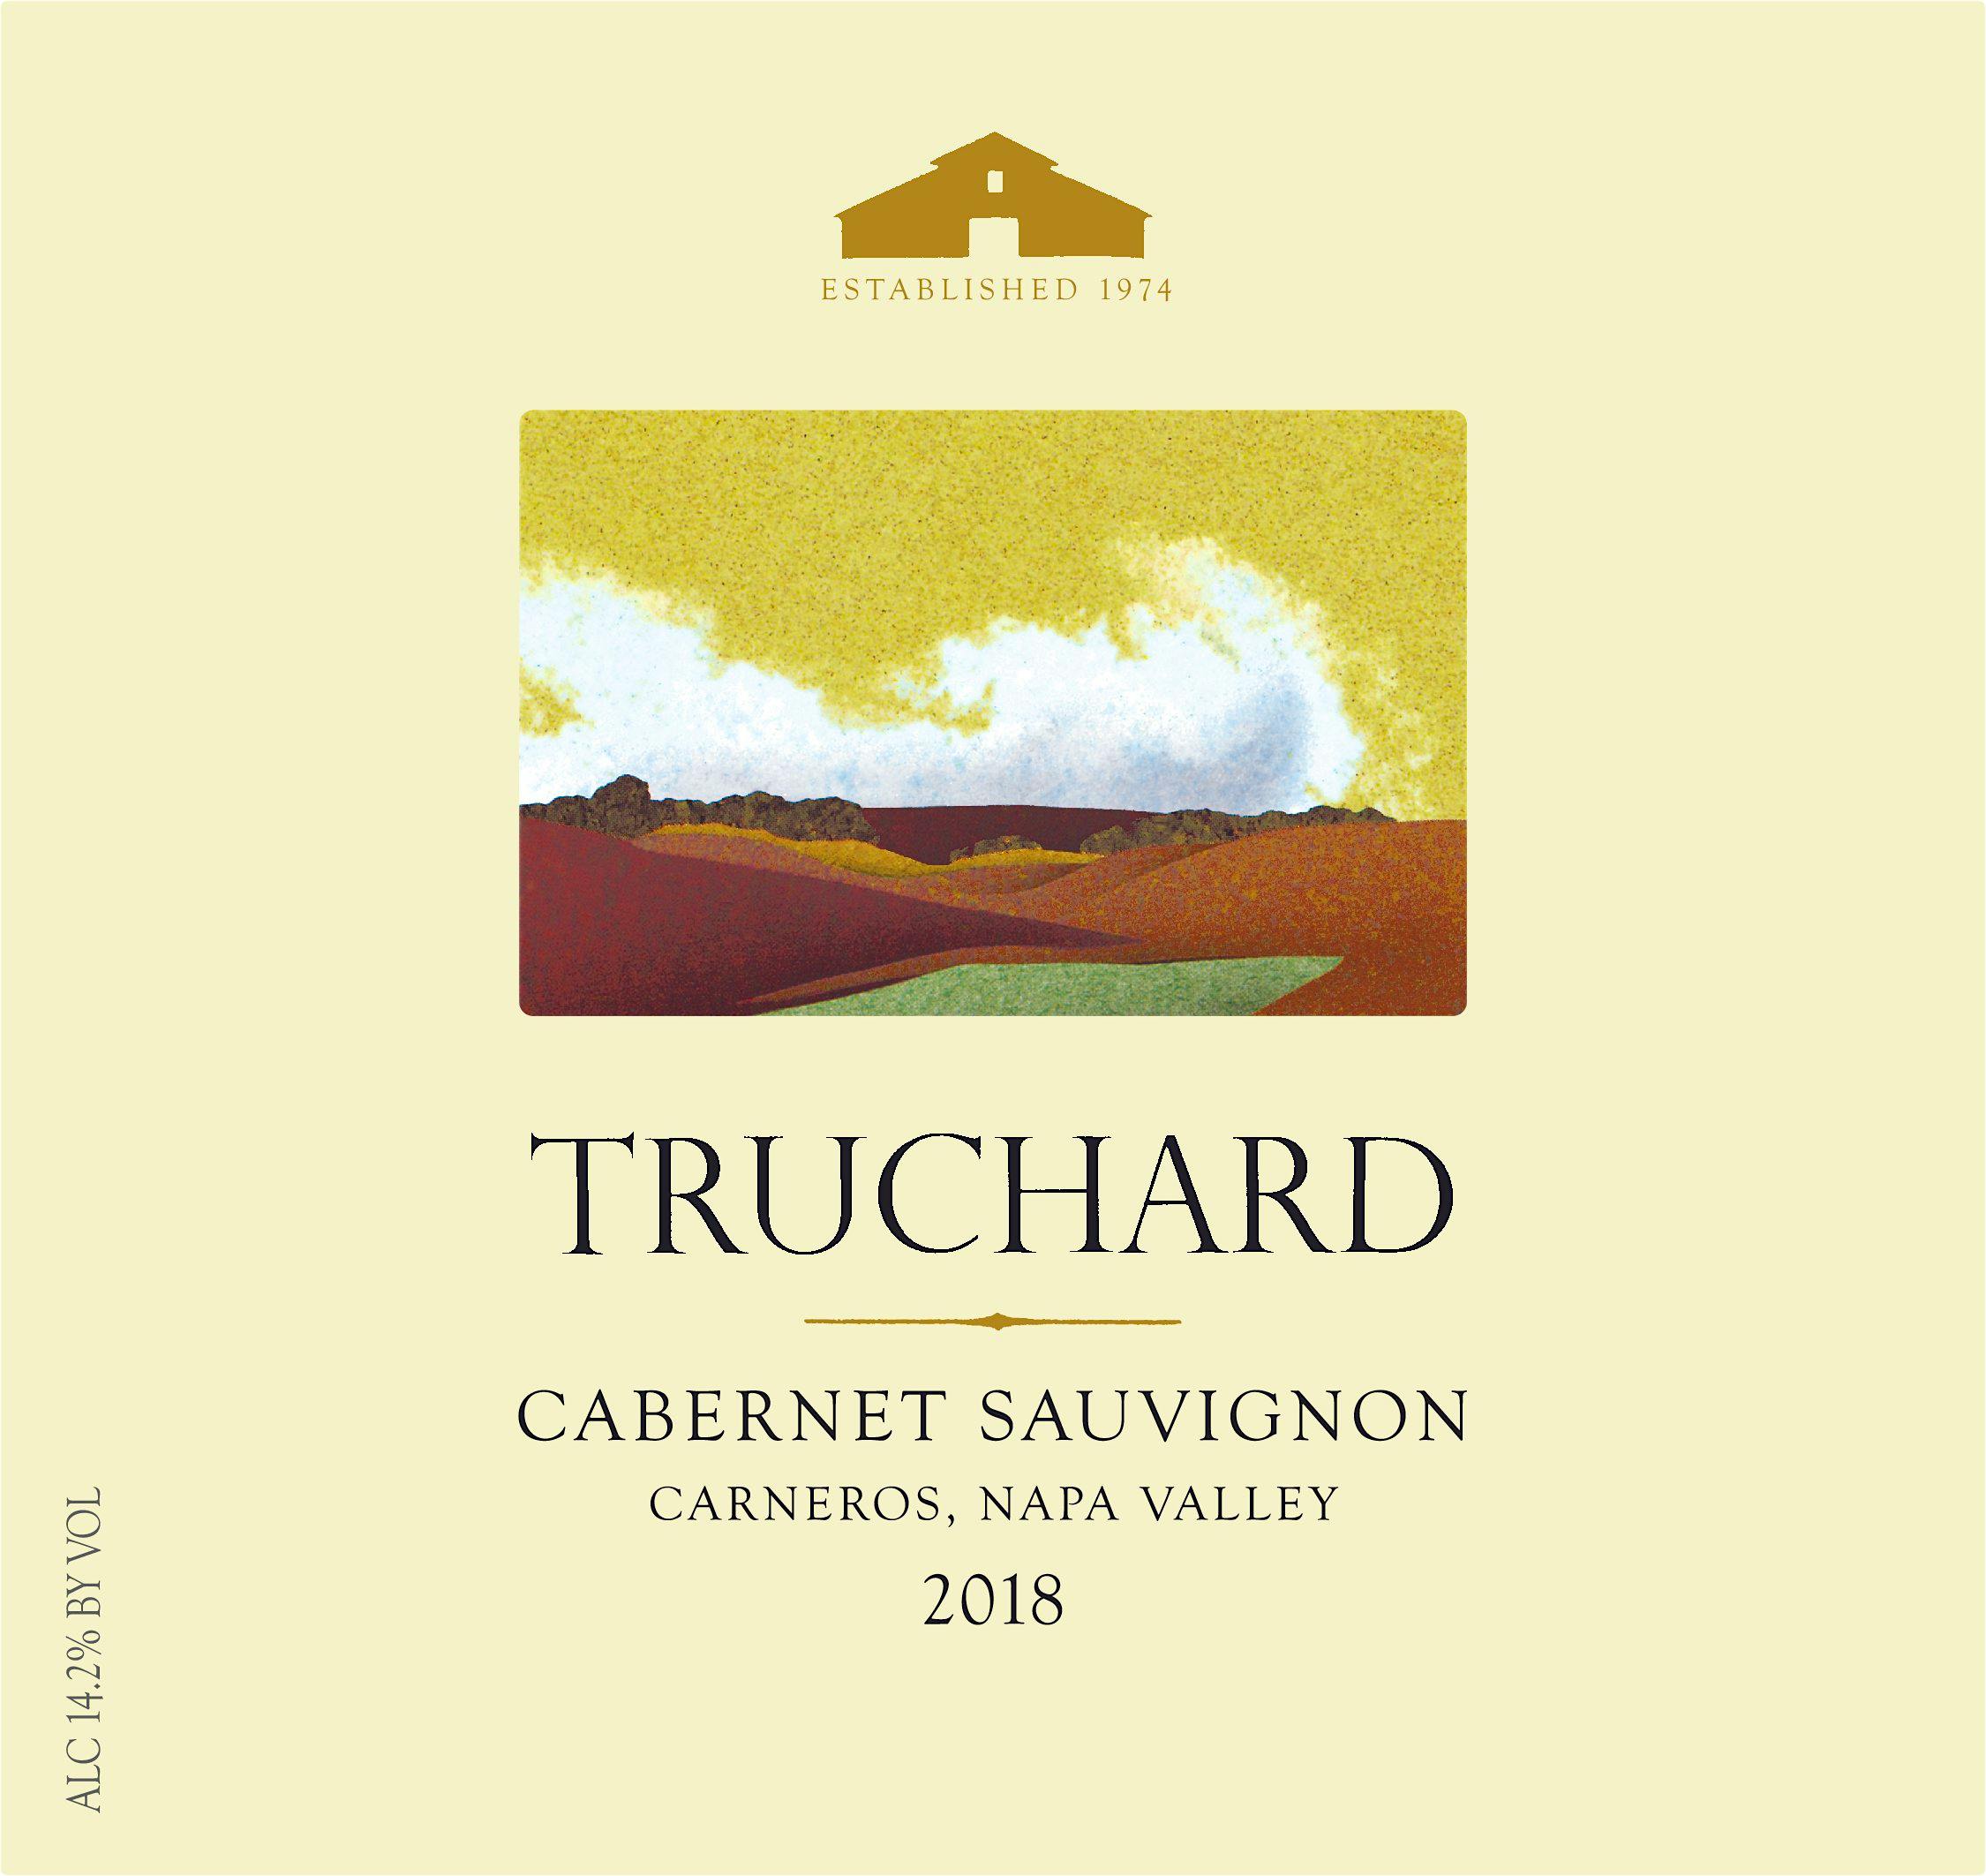 Label for Truchard